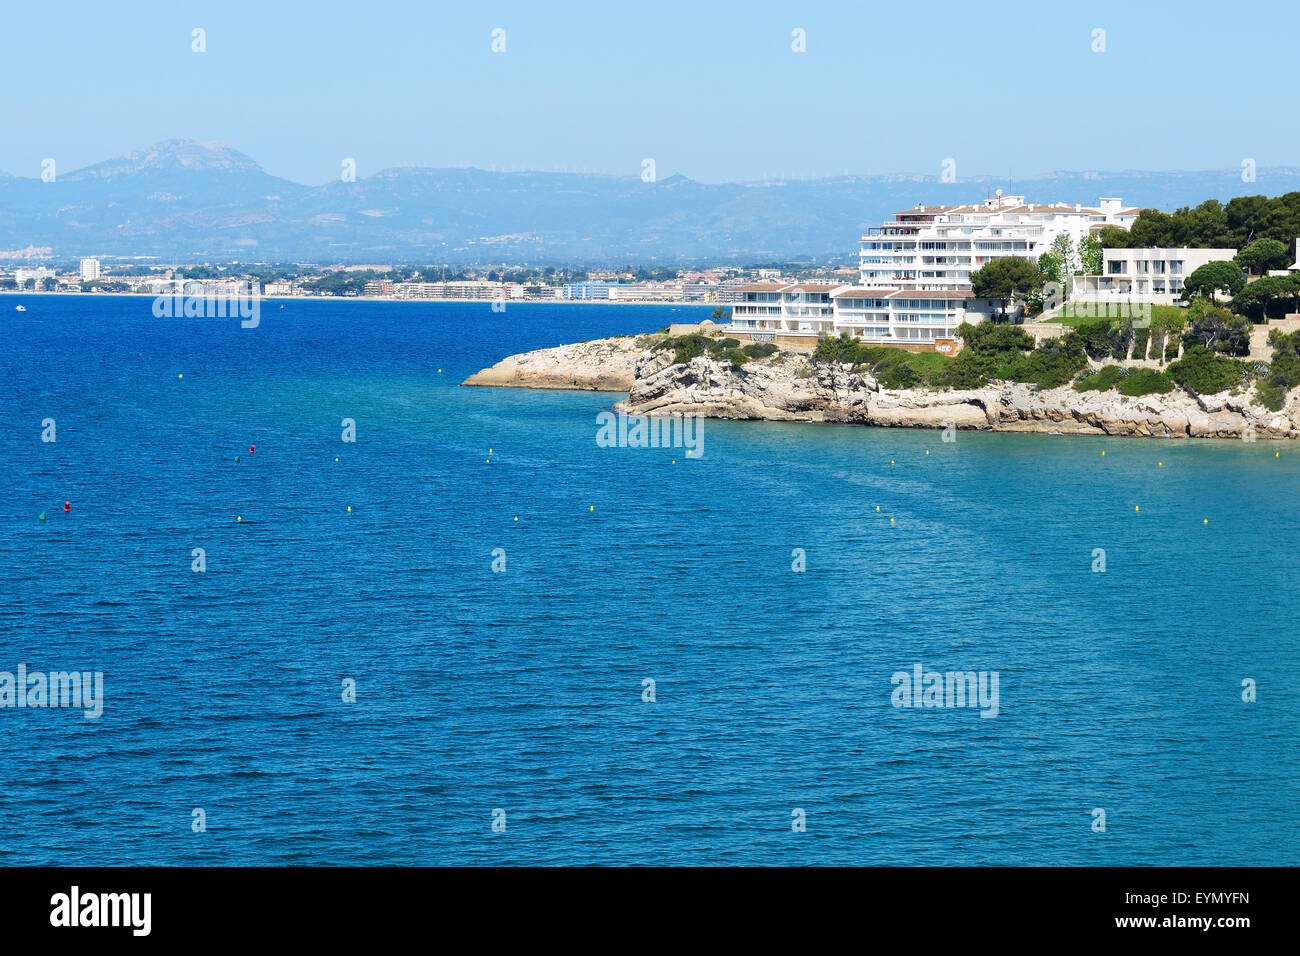 The view on luxury hotel and bay, Costa Dorada, Spain Stock Photo